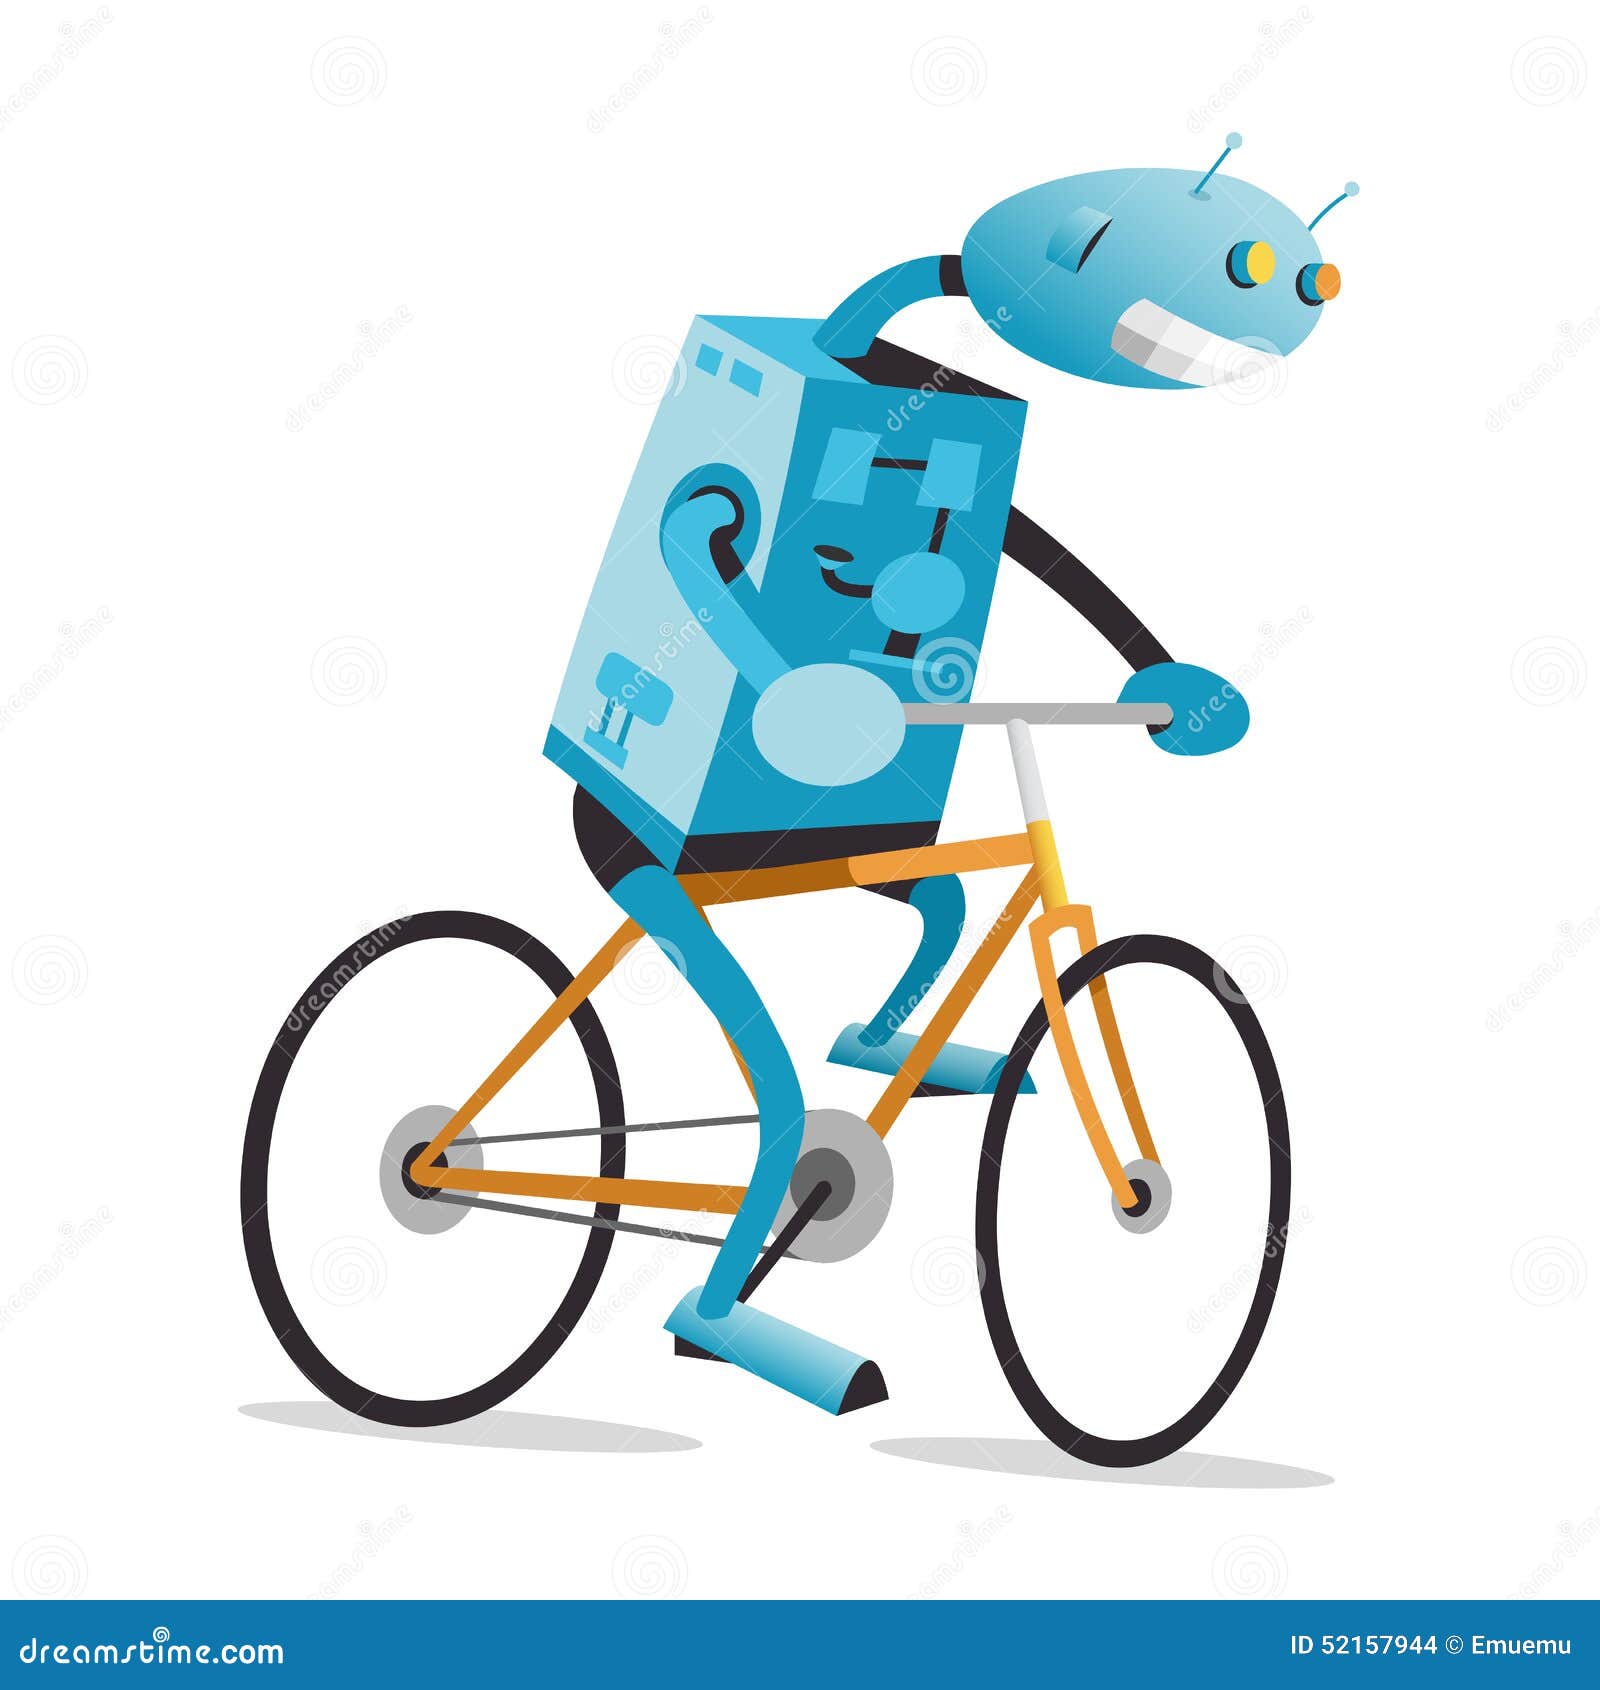 Robot on a bike stock illustration. Illustration of sport - 52157944